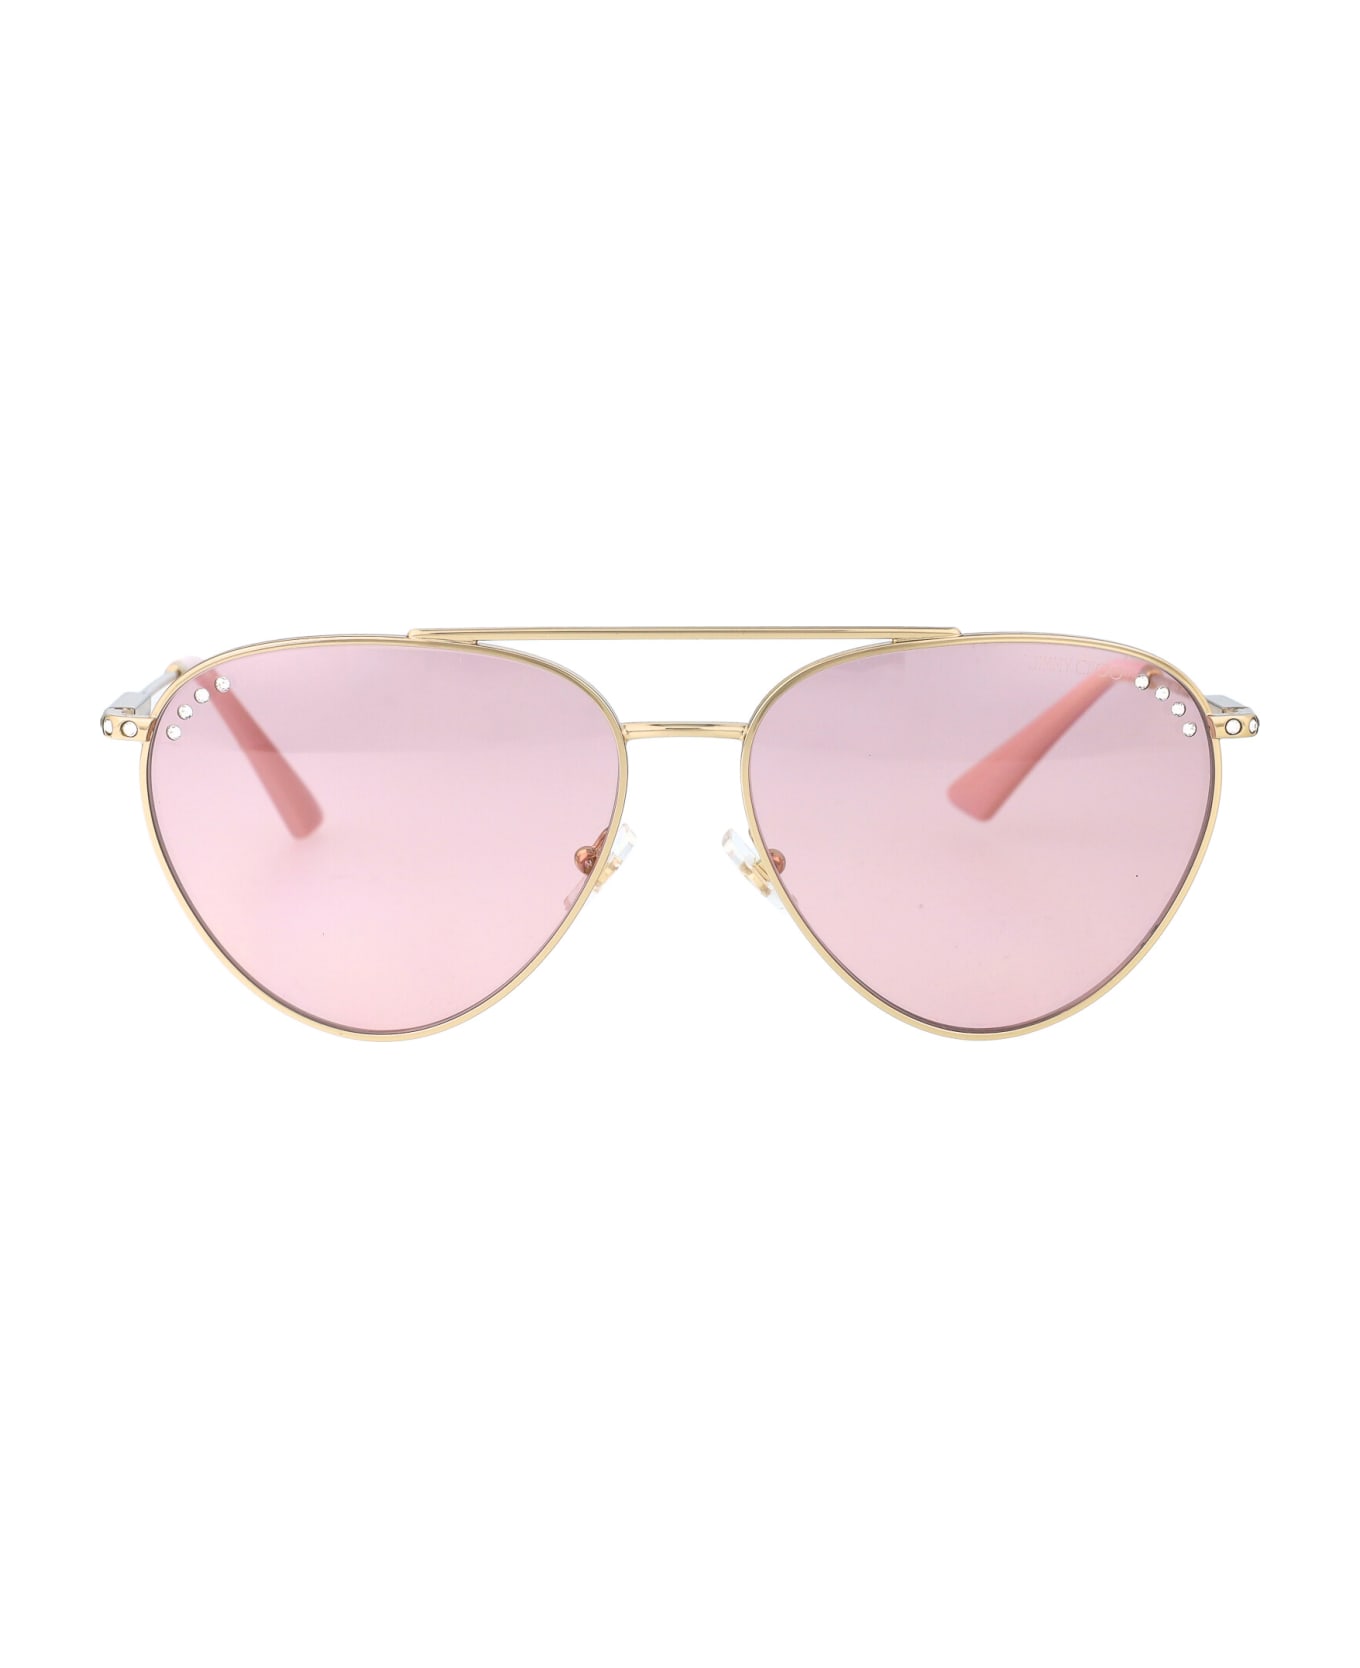 Jimmy Choo Eyewear 0jc4002b Sunglasses - 3006/5 Pale Gold